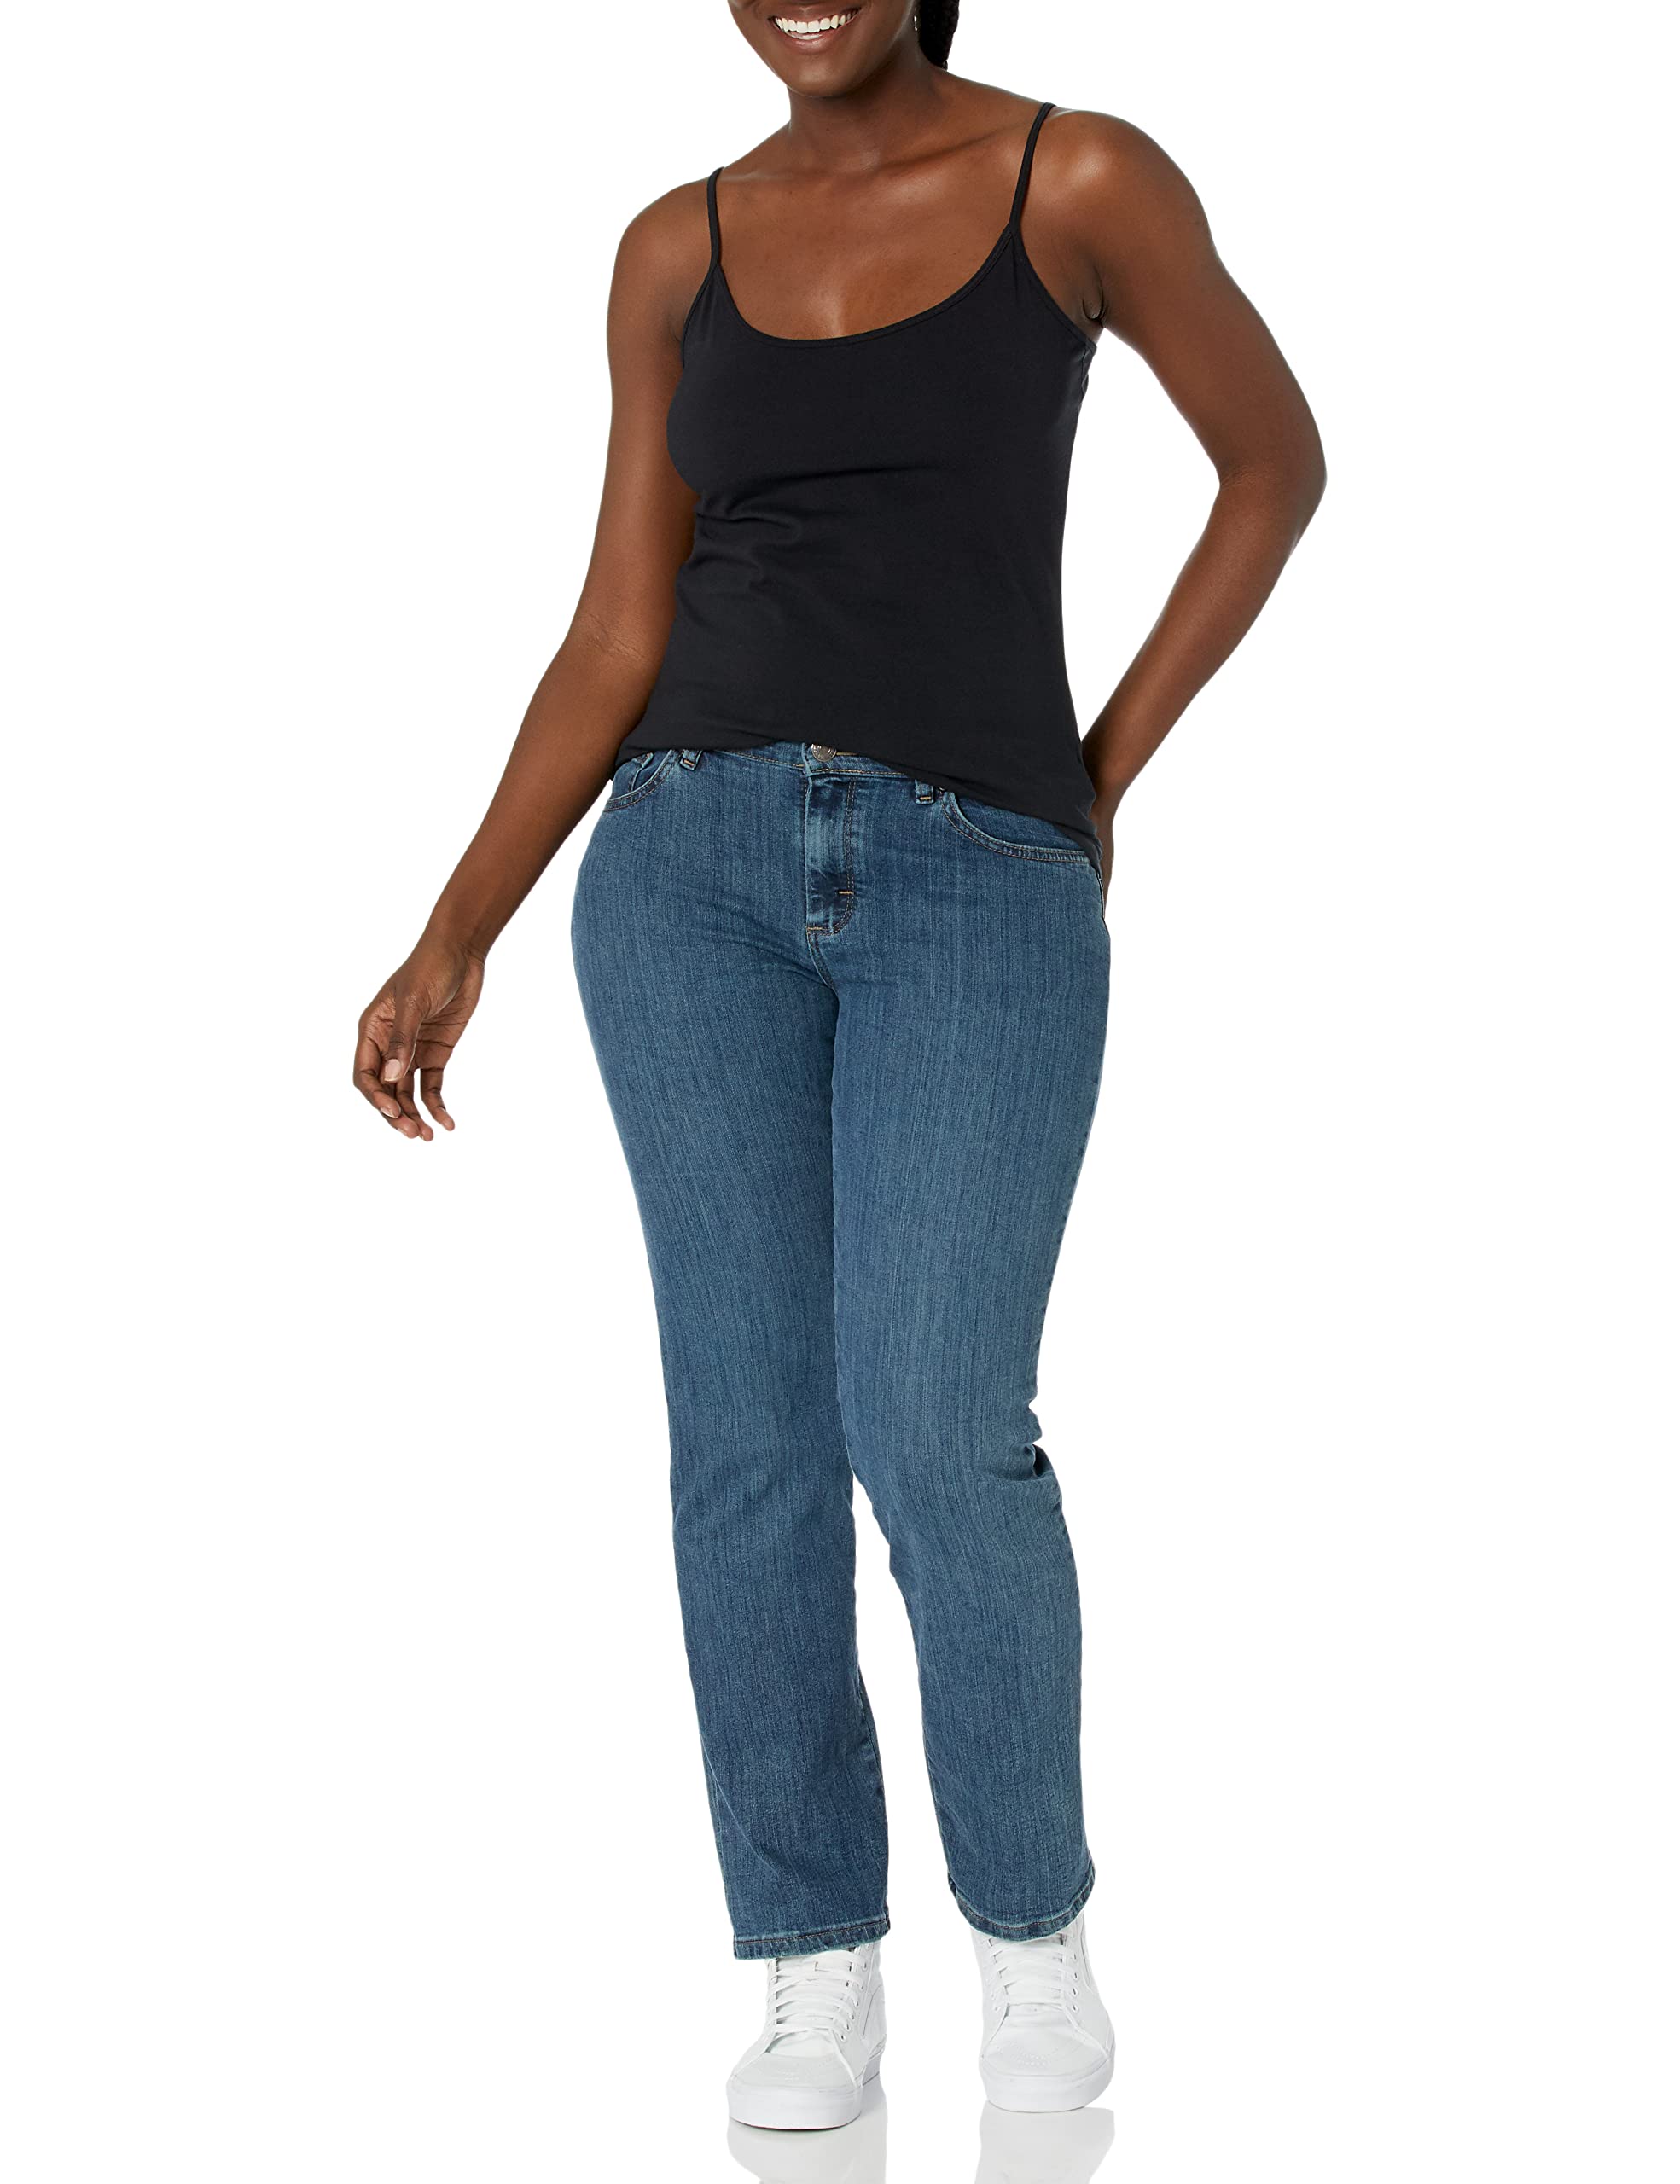 Amazon Essentials Women's Slim-Fit Camisole, Pack of 4